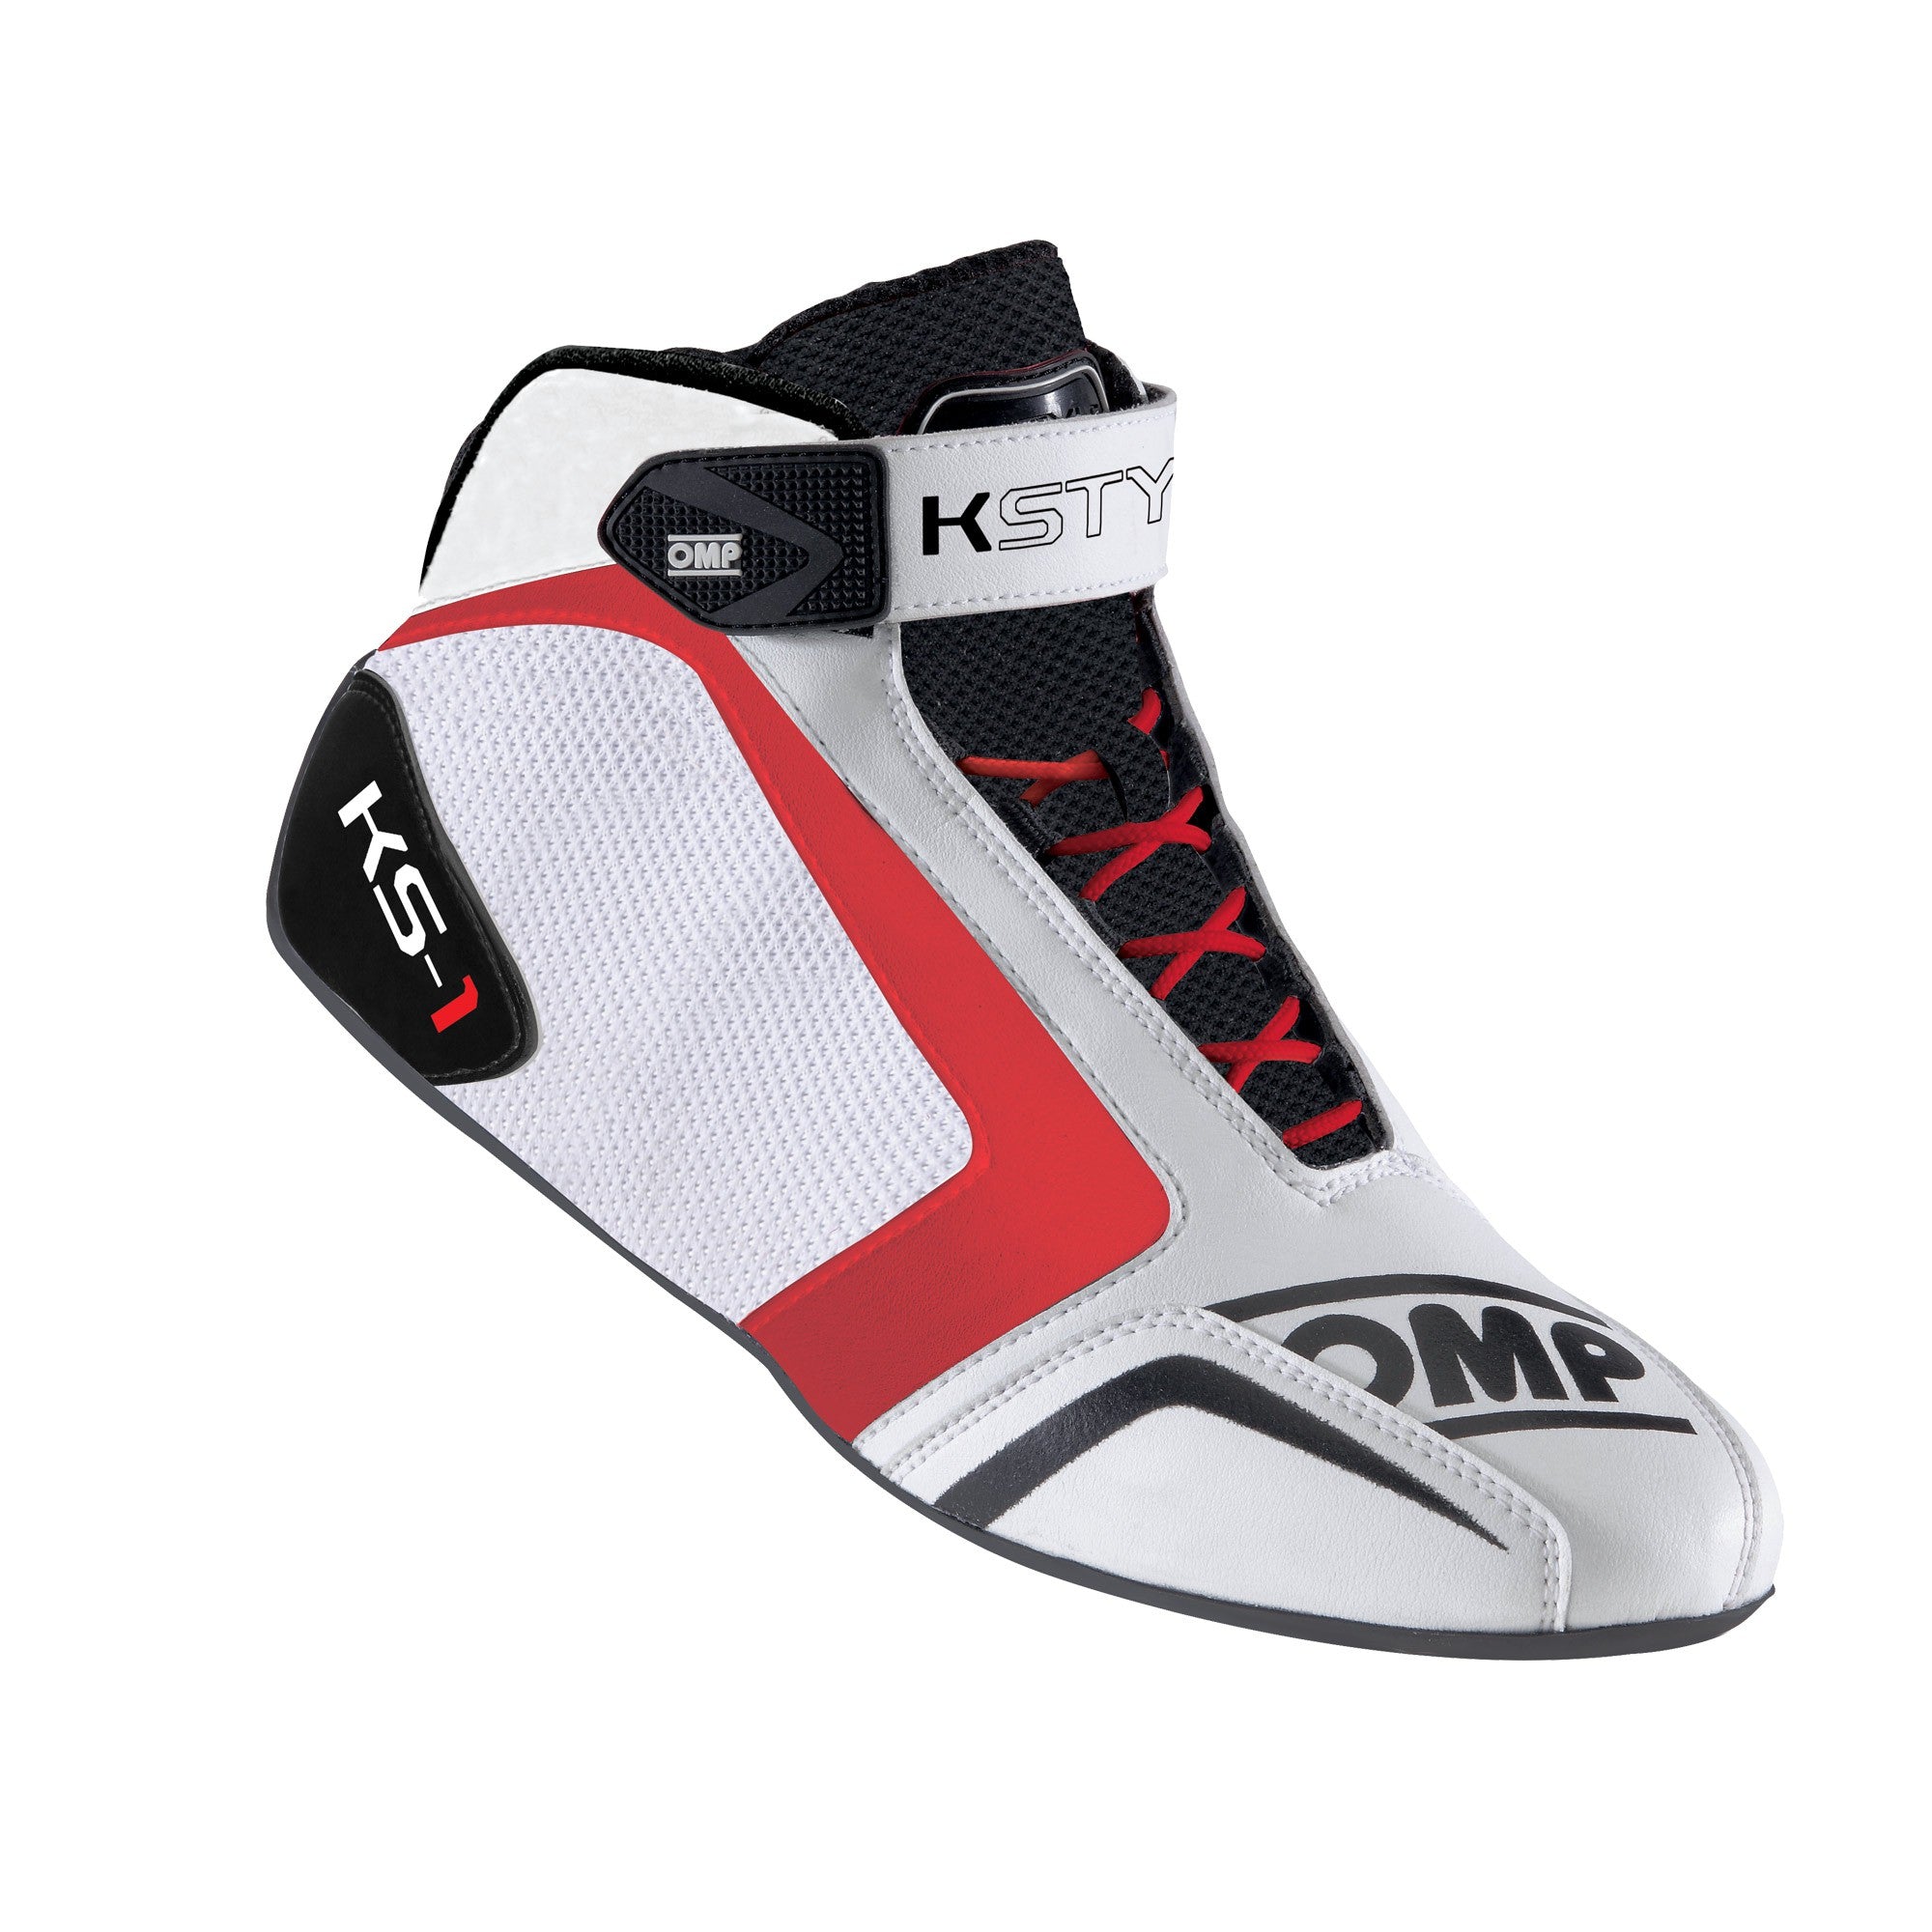 OMP KC0-0815-A01-120-38 (IC/81512038) Kart shoes KS-1, white/black/red, size 38 Photo-0 